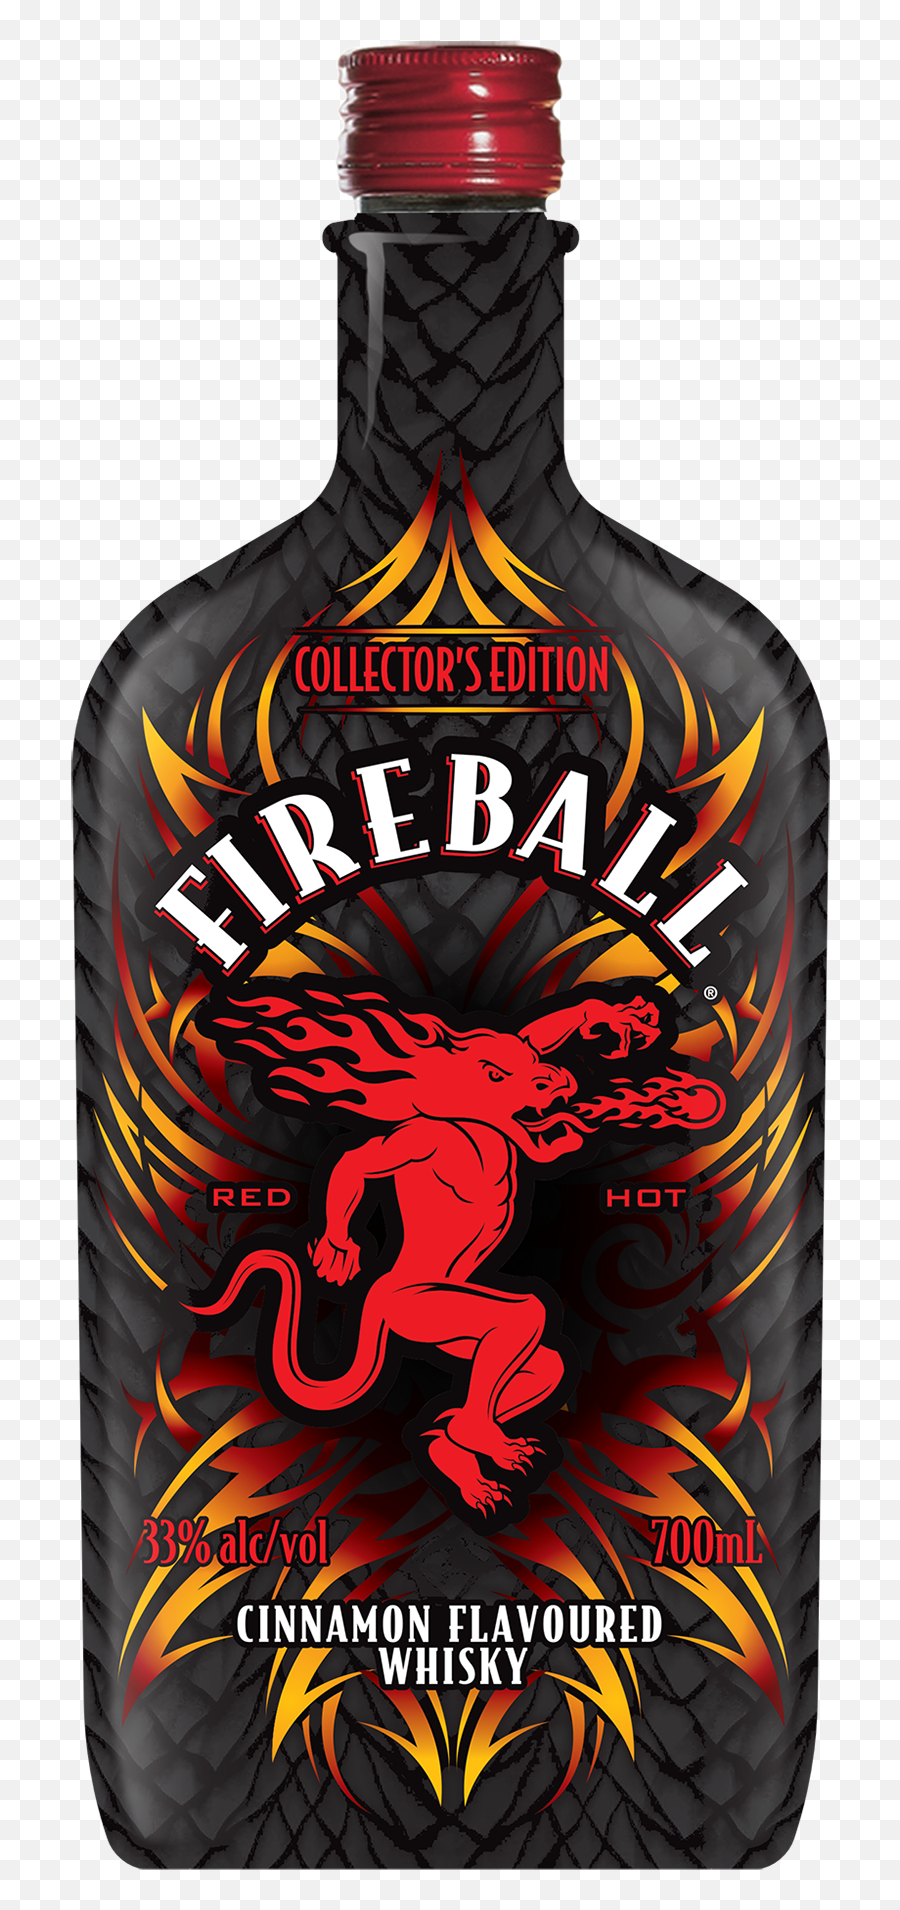 Fireball Cinnamon Whisky Collectors Edition 700ml - Fireball Whiskey Png,Fireball Whiskey Png